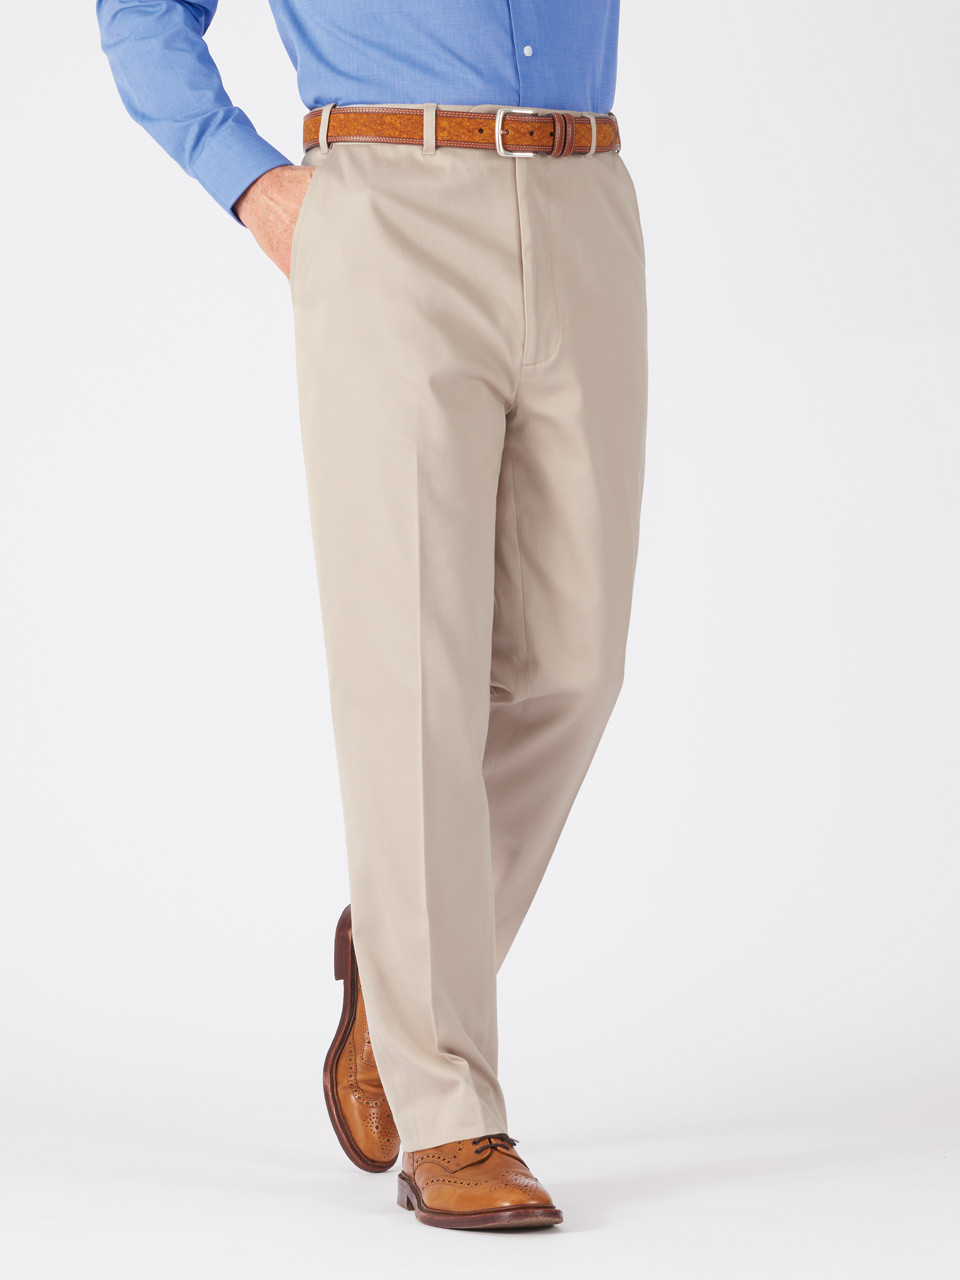 Peter England Casuals Khaki Cotton Slim Fit Trousers